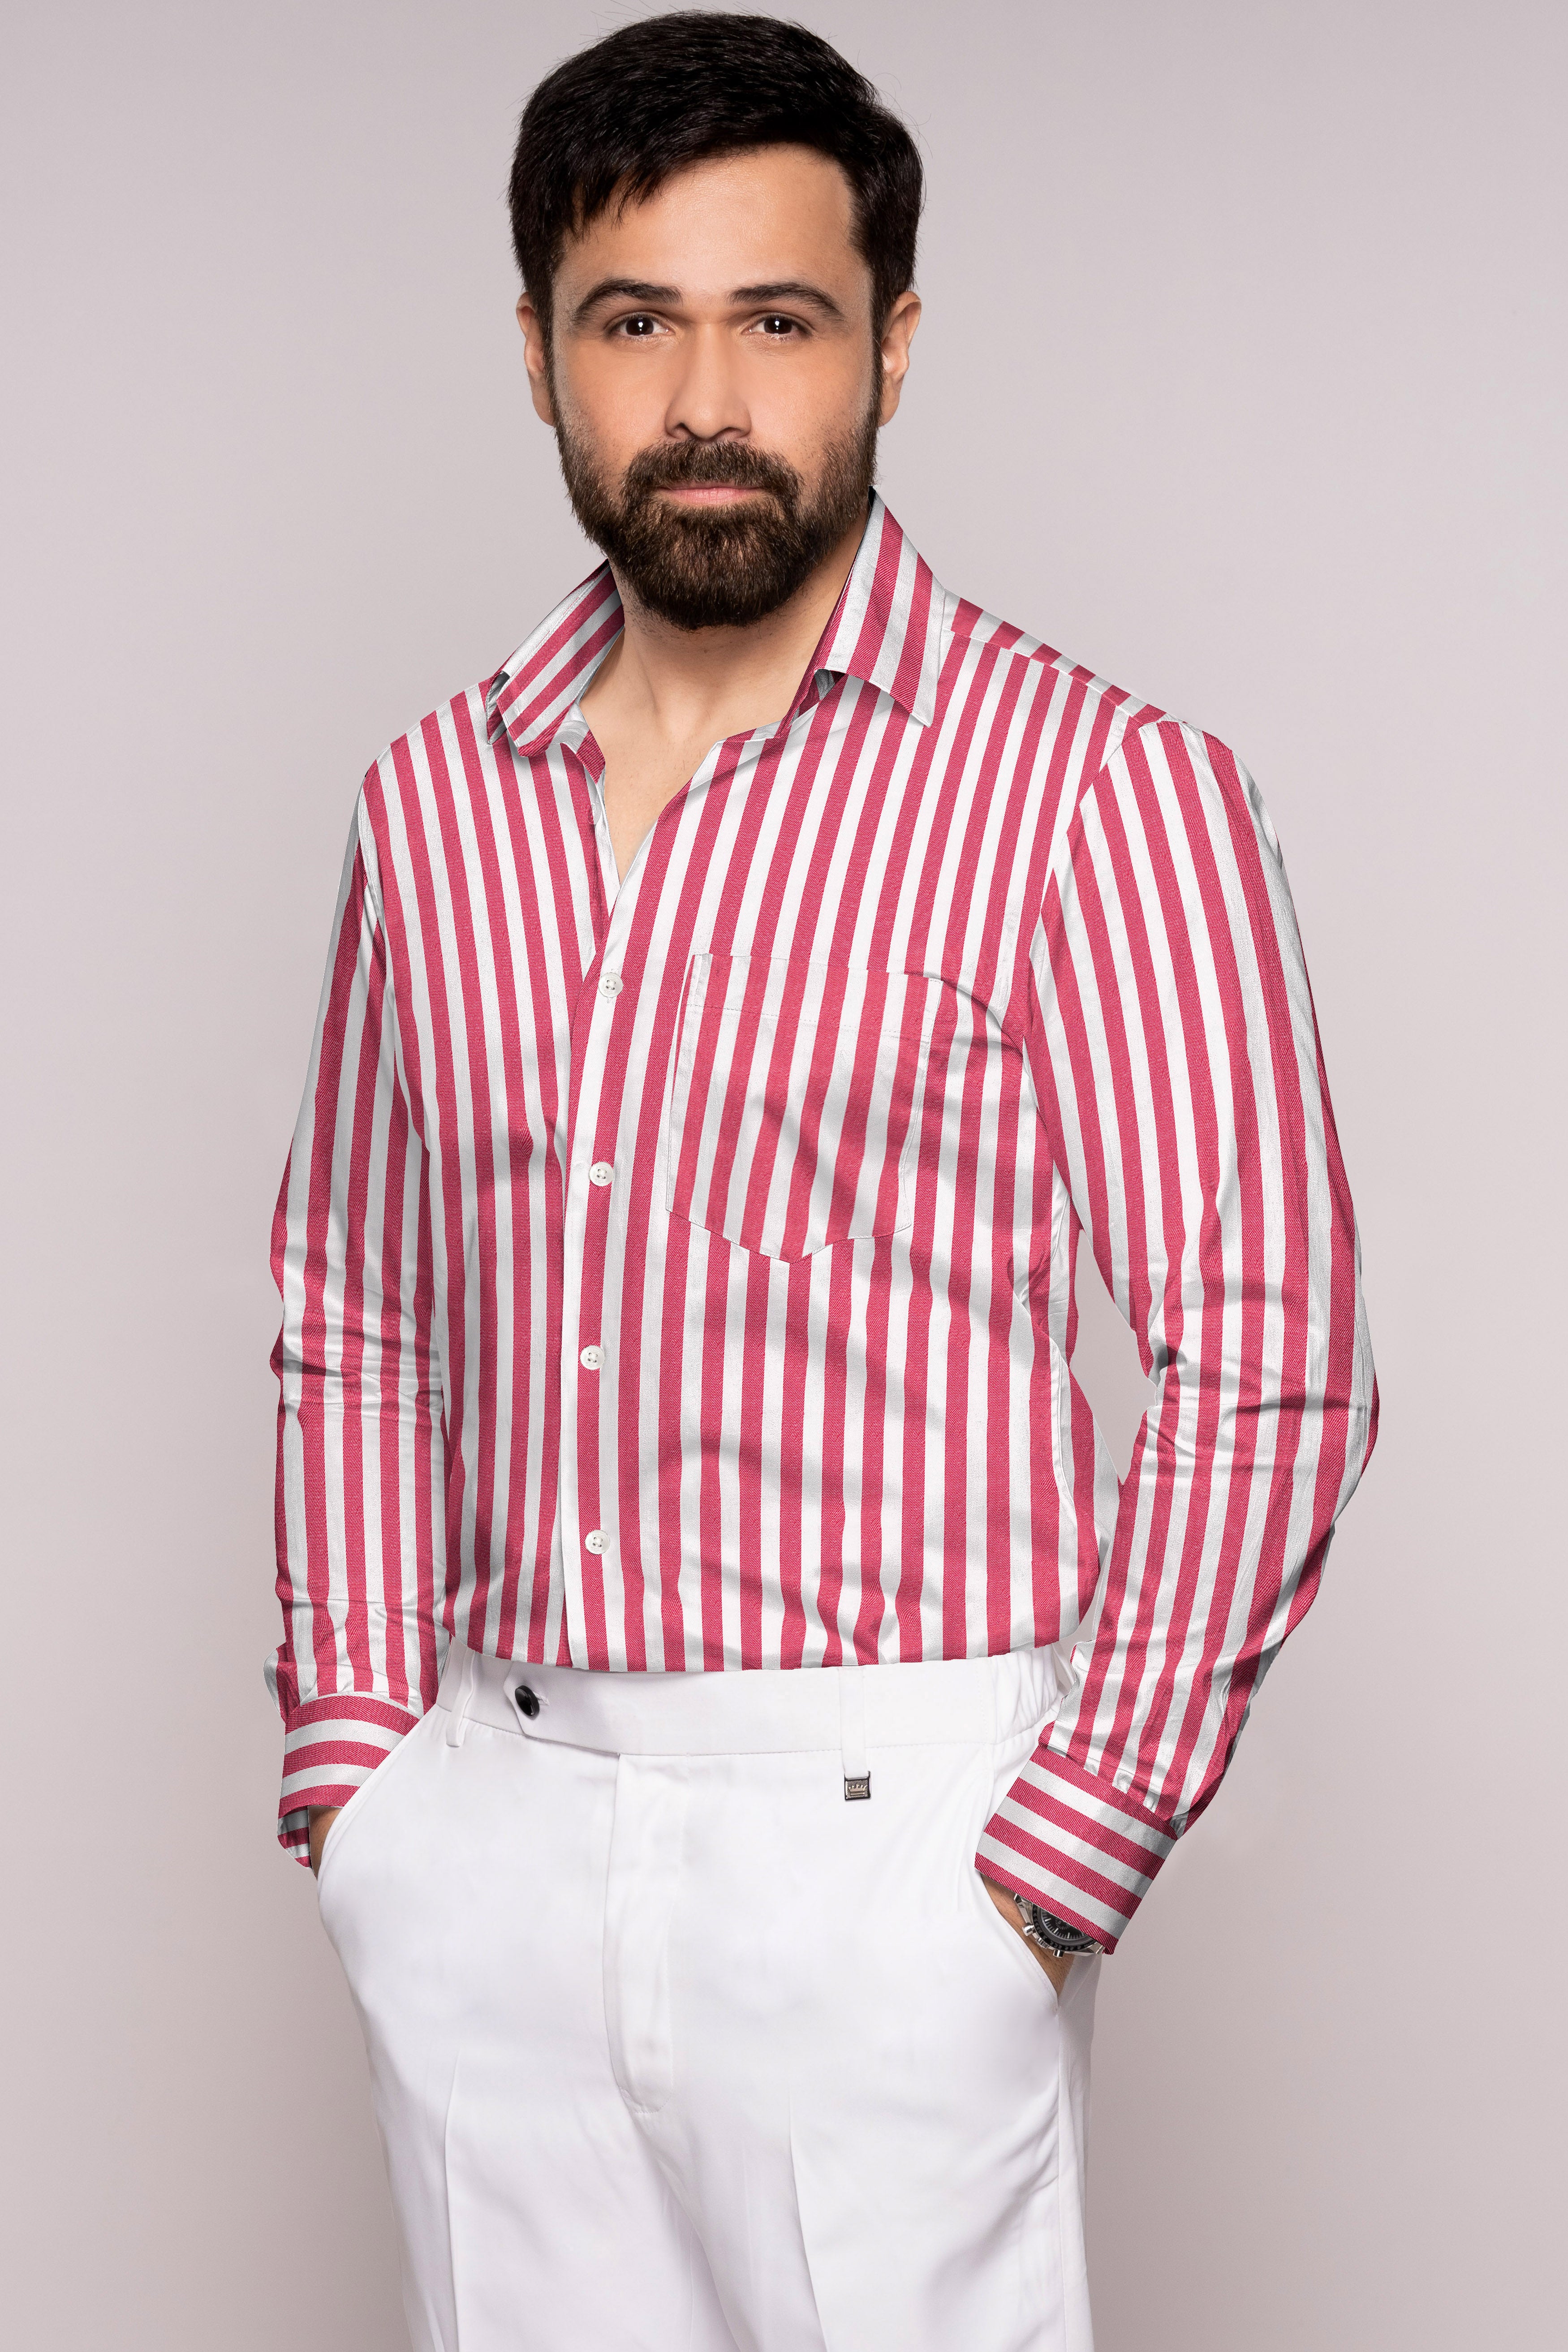 Chestnut Rose Pink and White Twill Striped Premium Cotton Shirt